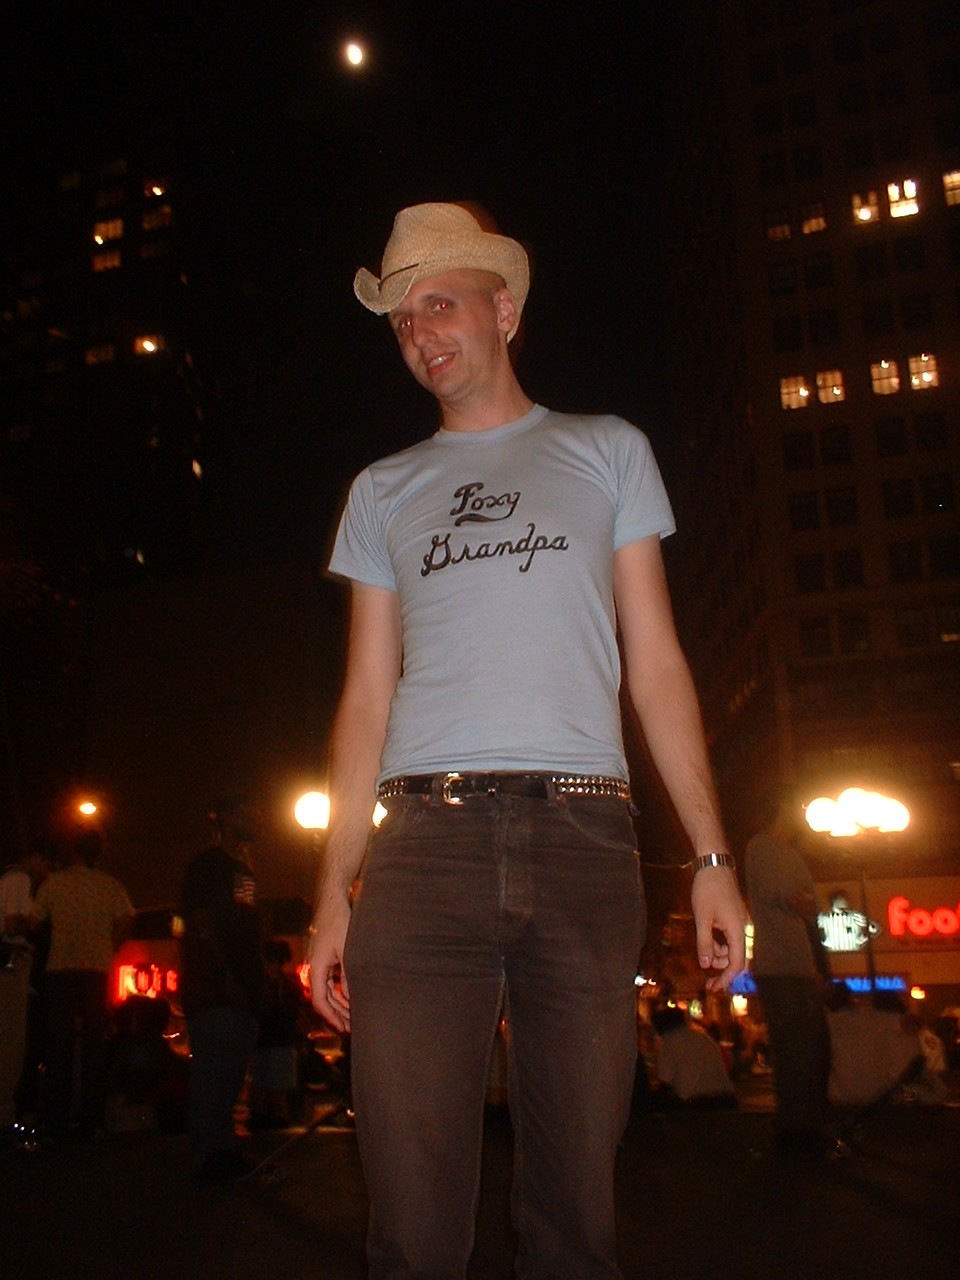 Normal Bob in Foxy Grandpa shirt and cowboy hat